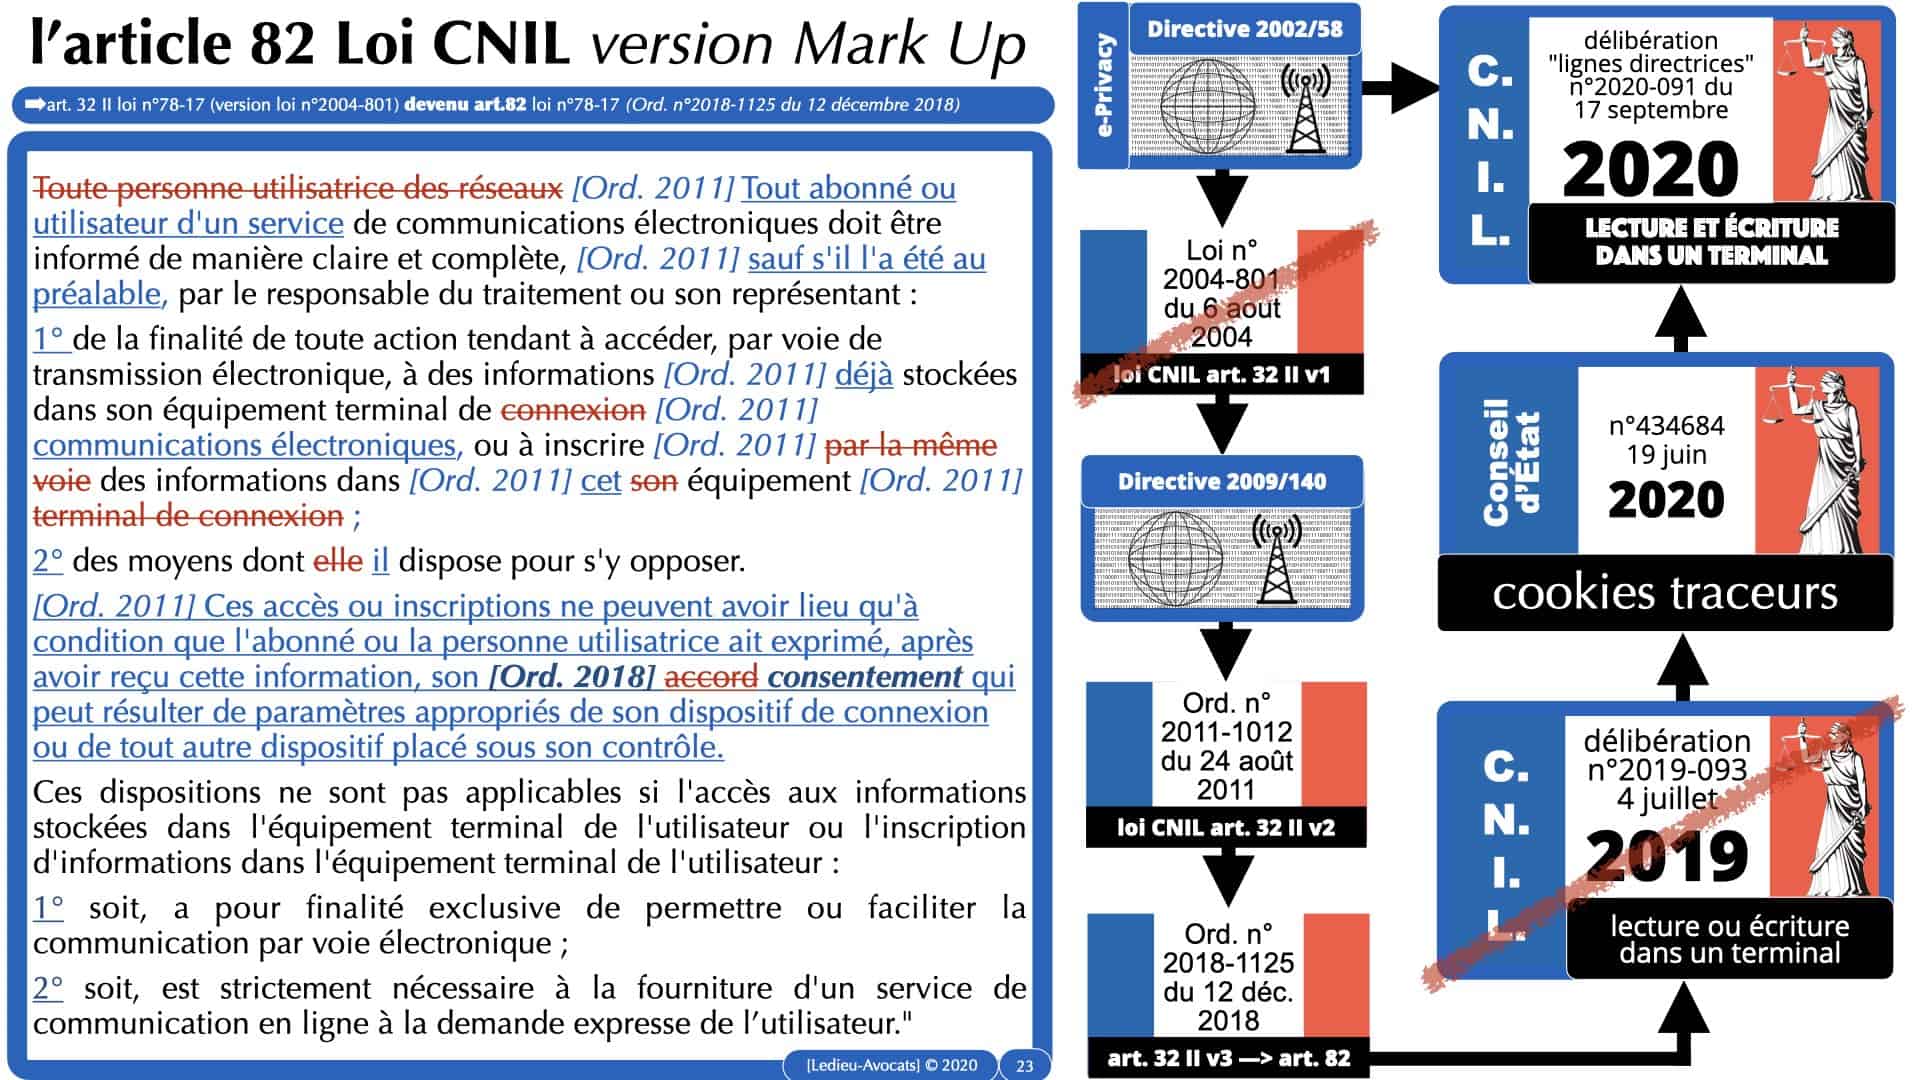 jurisprudence CNIL cookie traceur e-privacy RGPD ©Ledieu-Avocats 14-12-2020.023